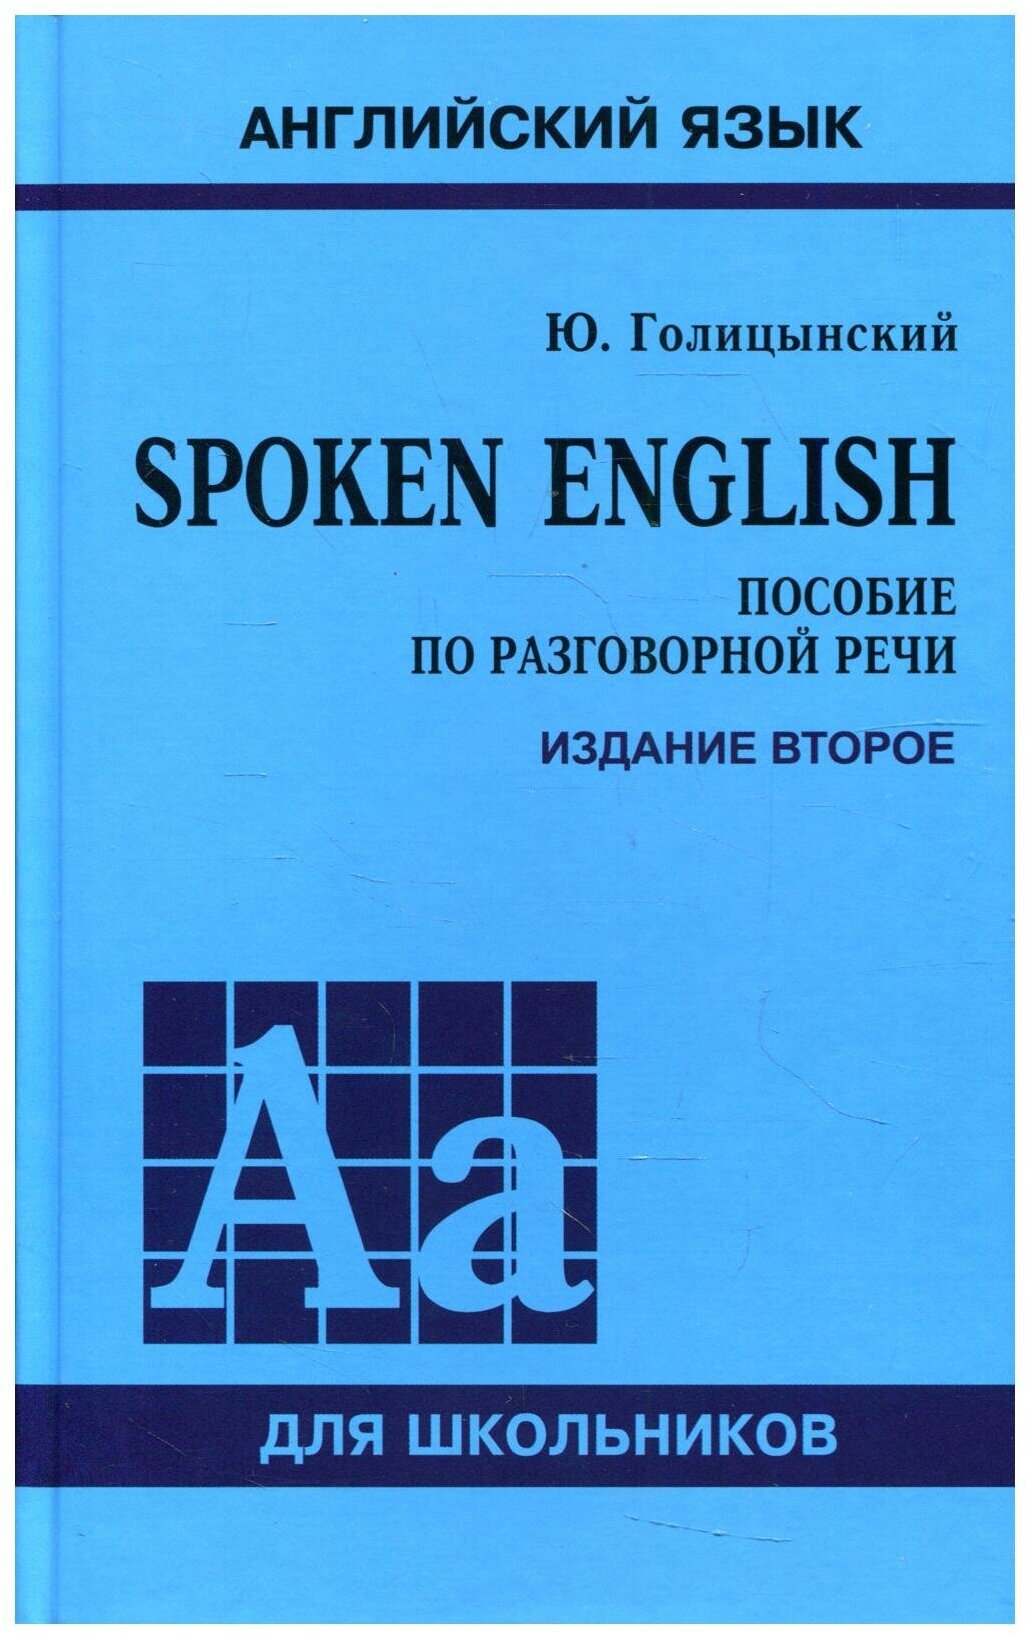 Spoken English. Пособие по разговорной речи - фото №1